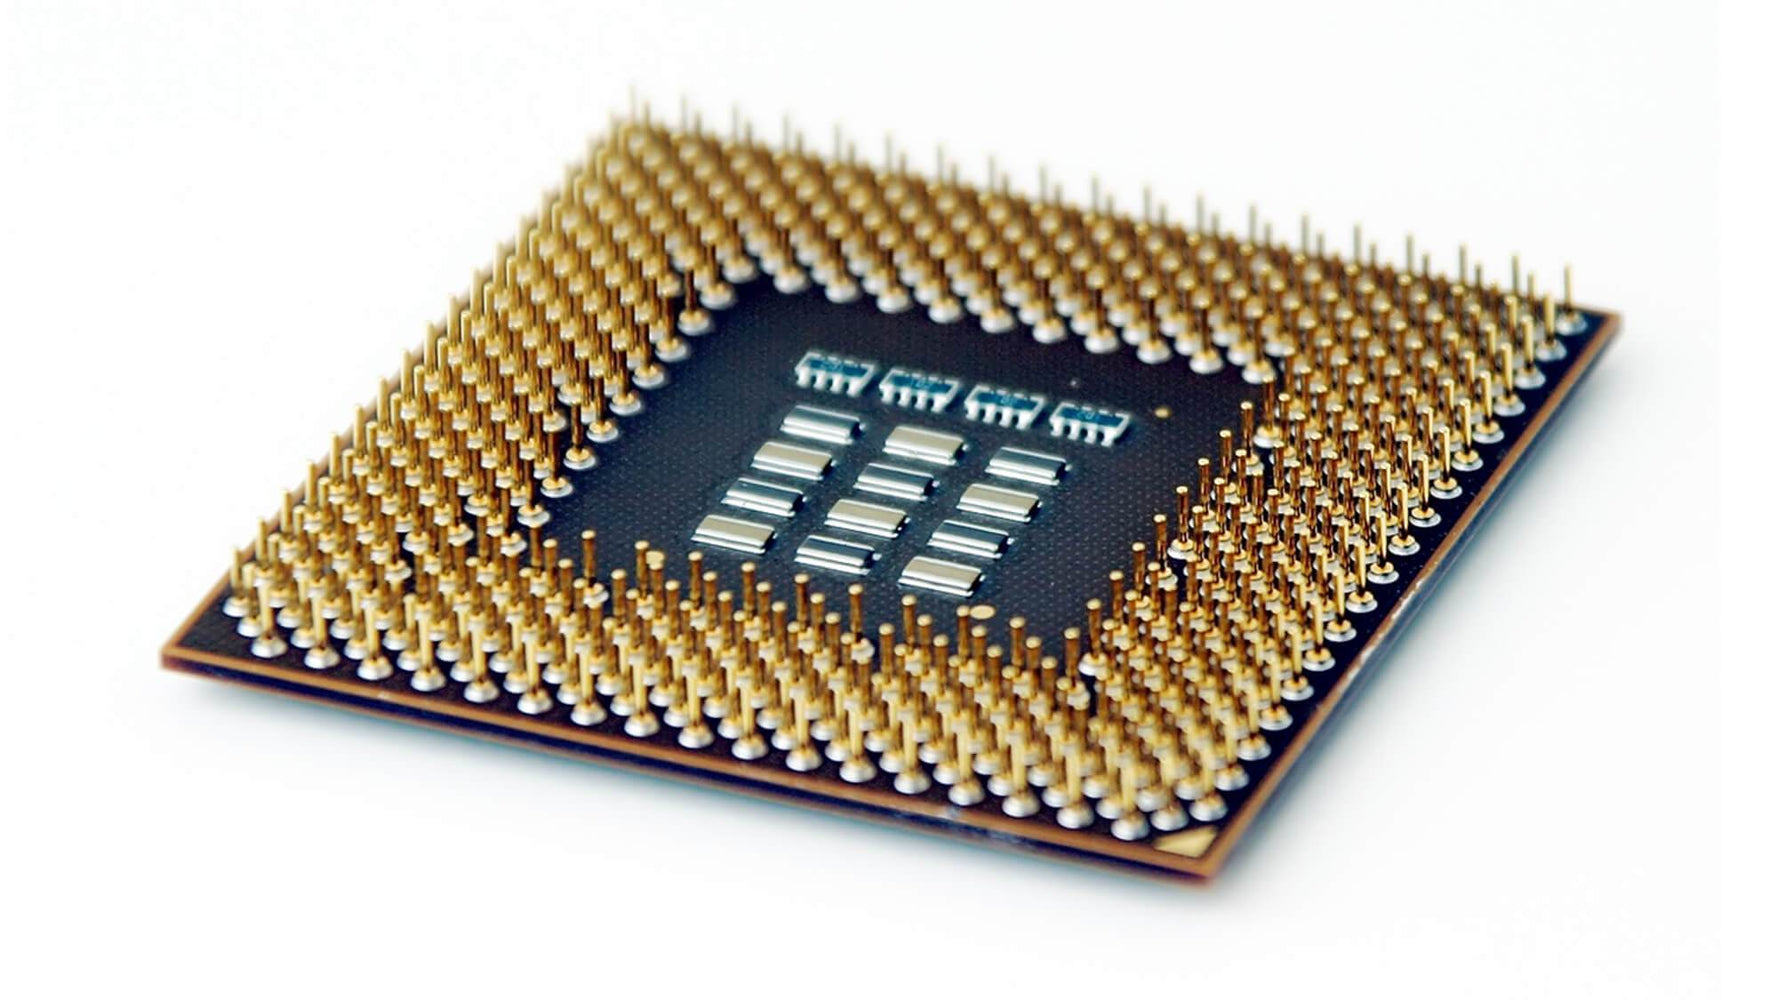 BX80621E54620 - Intel Xeon 8 Core E5-4620 2.2GHz 16MB SMART Cache 7.2GT/S QPI Socket FCLGA-2011 32NM 95W Processor